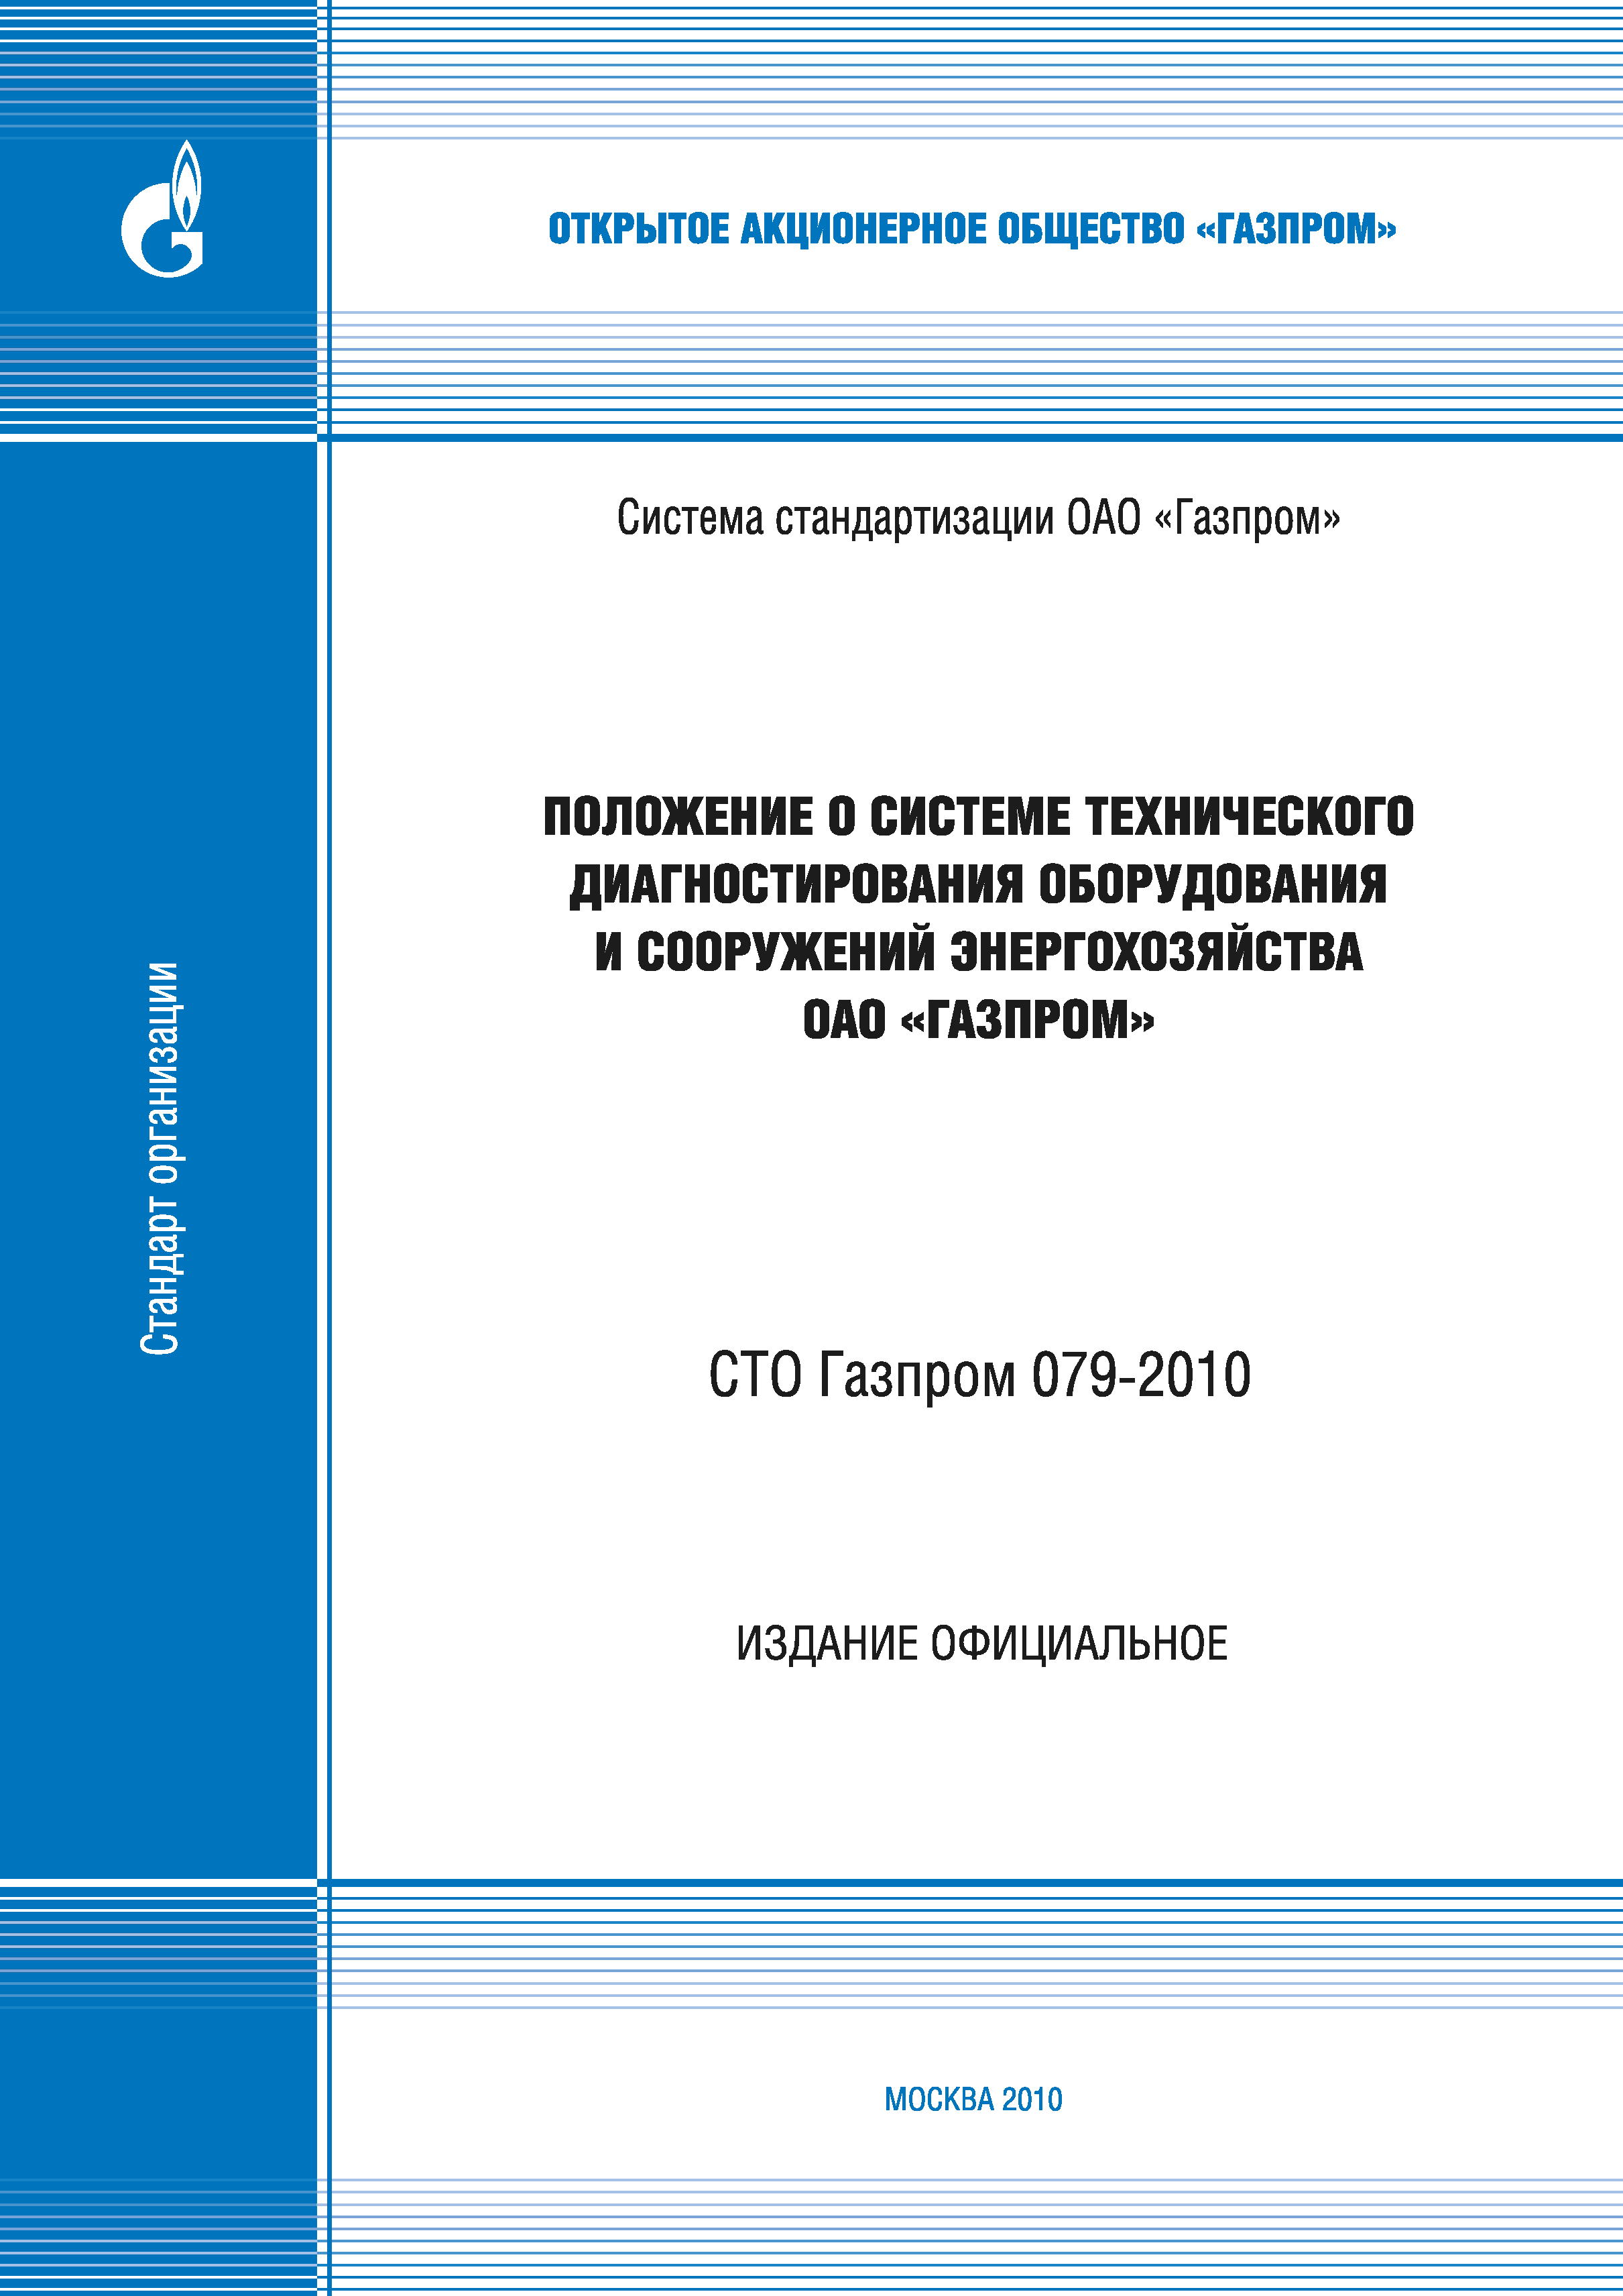 СТО Газпром 079-2010